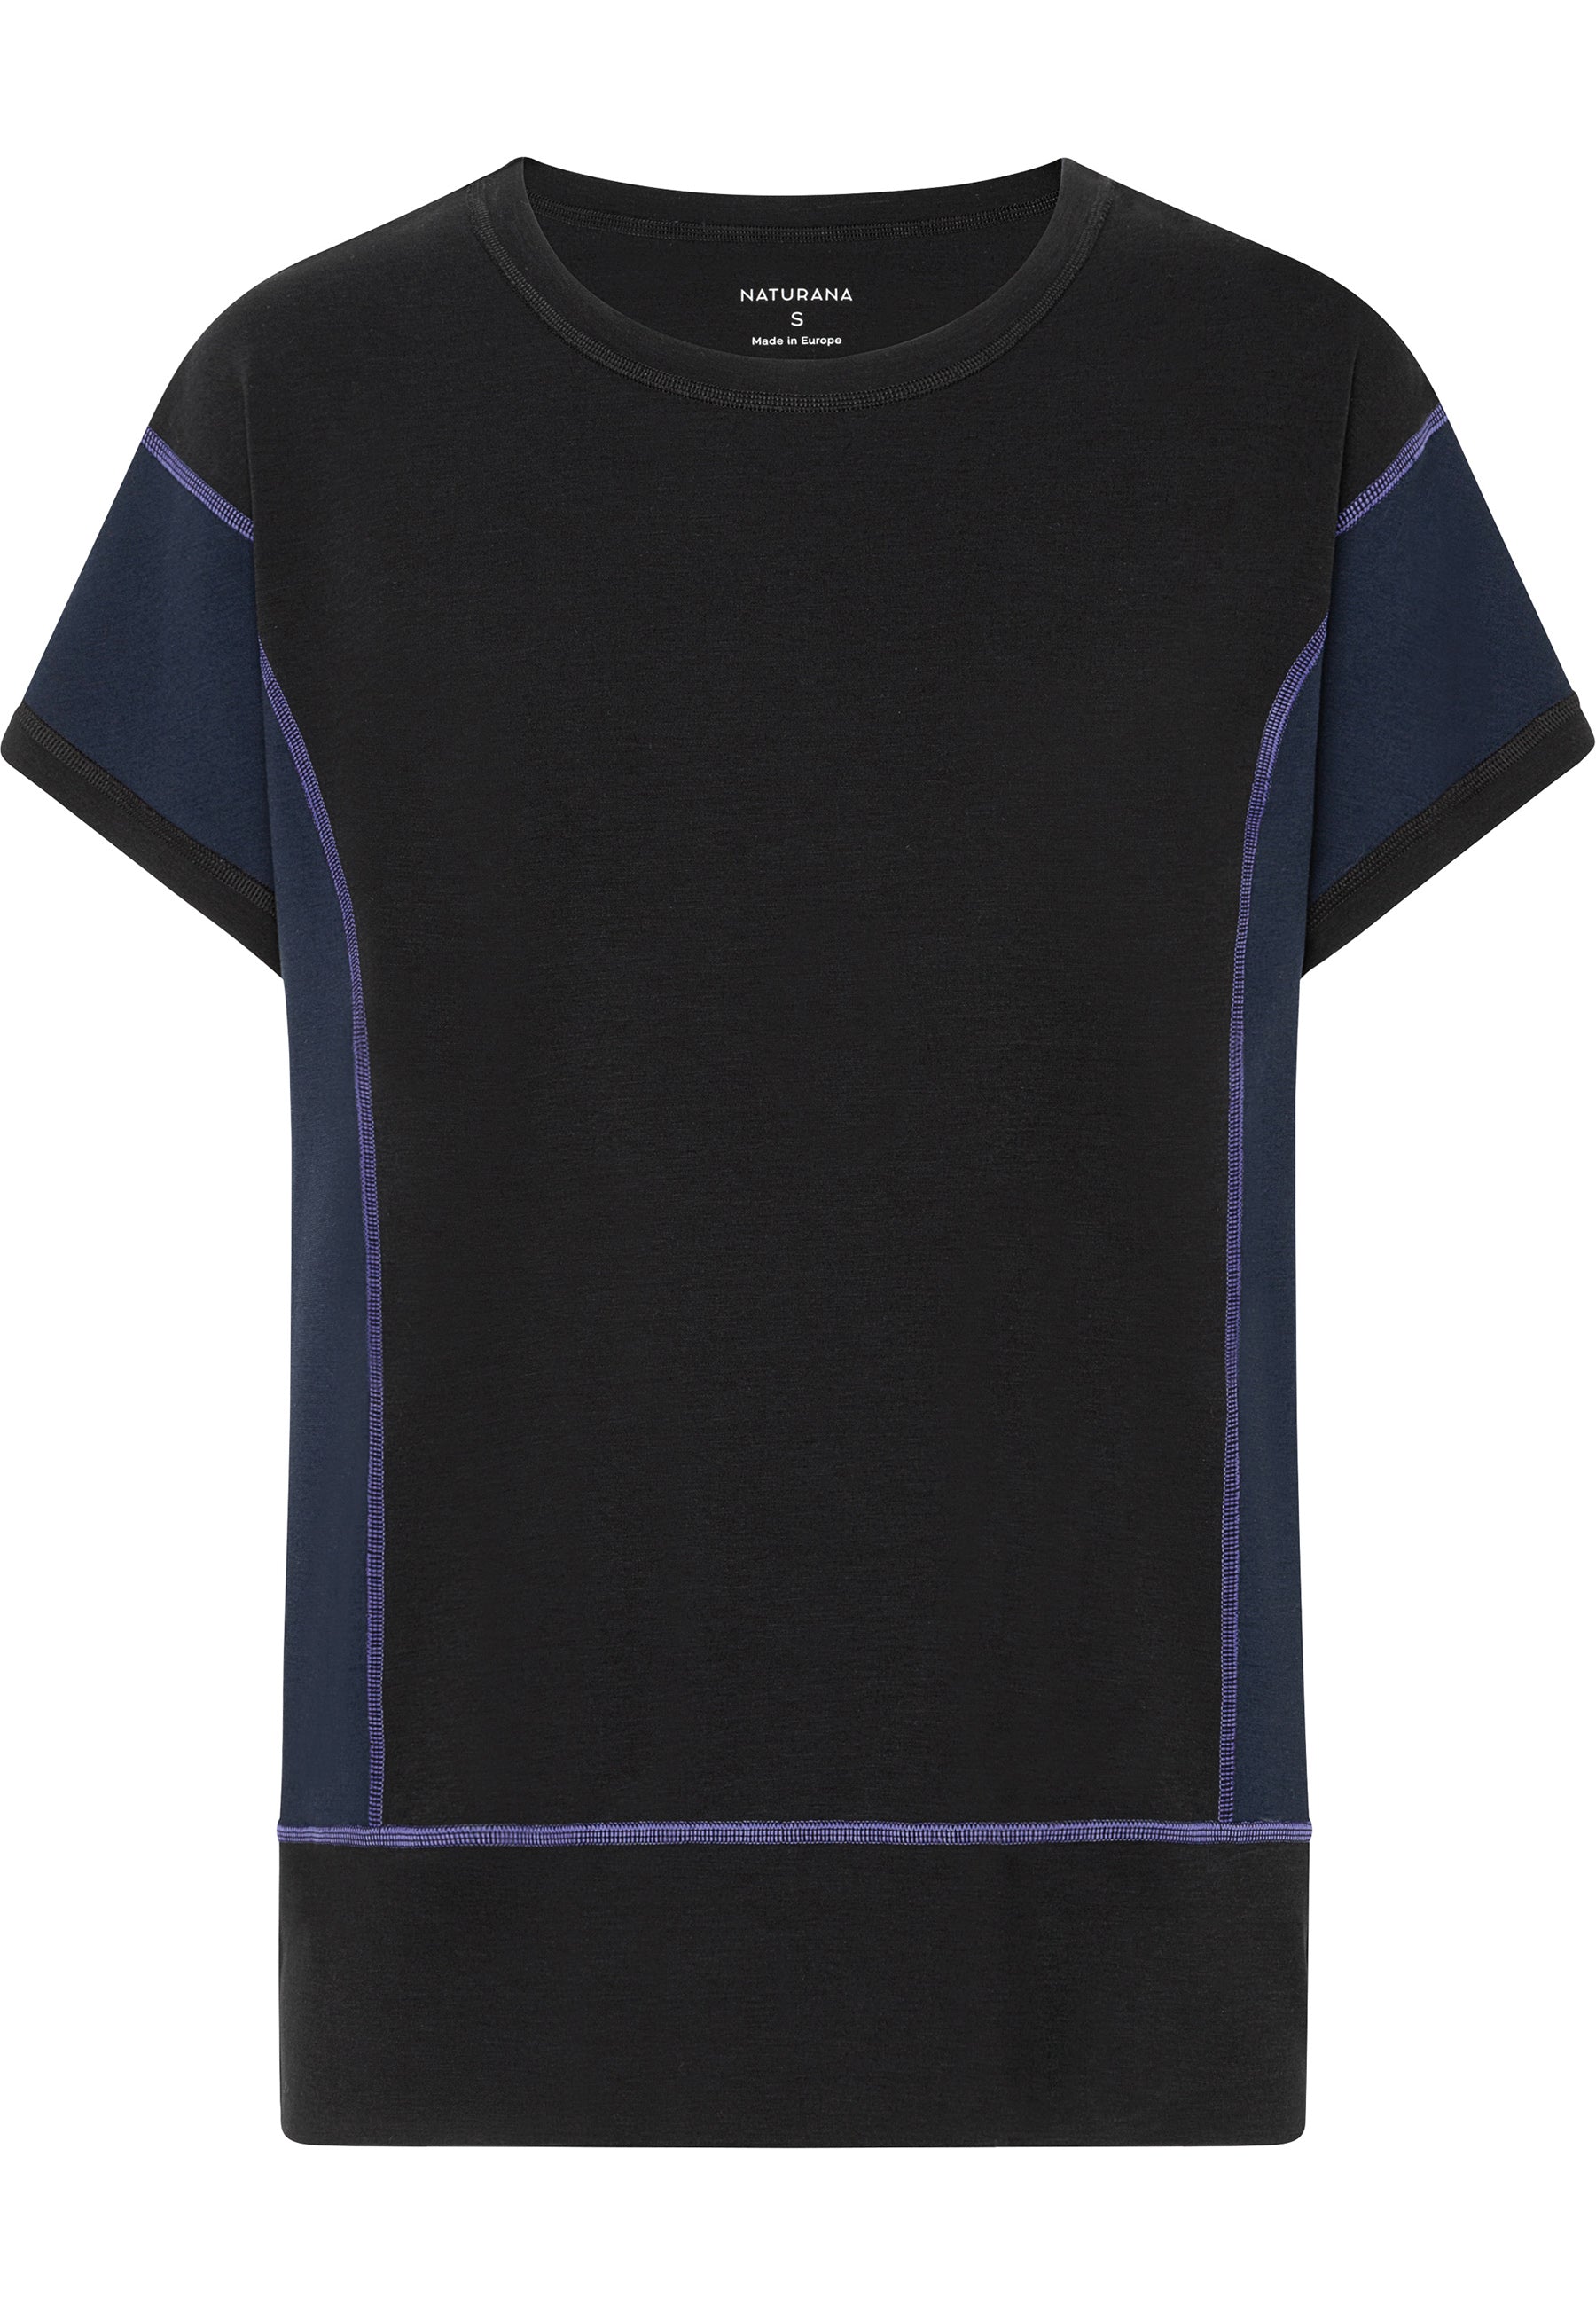 T-Shirt Pure Nature - Dark Blue/Black